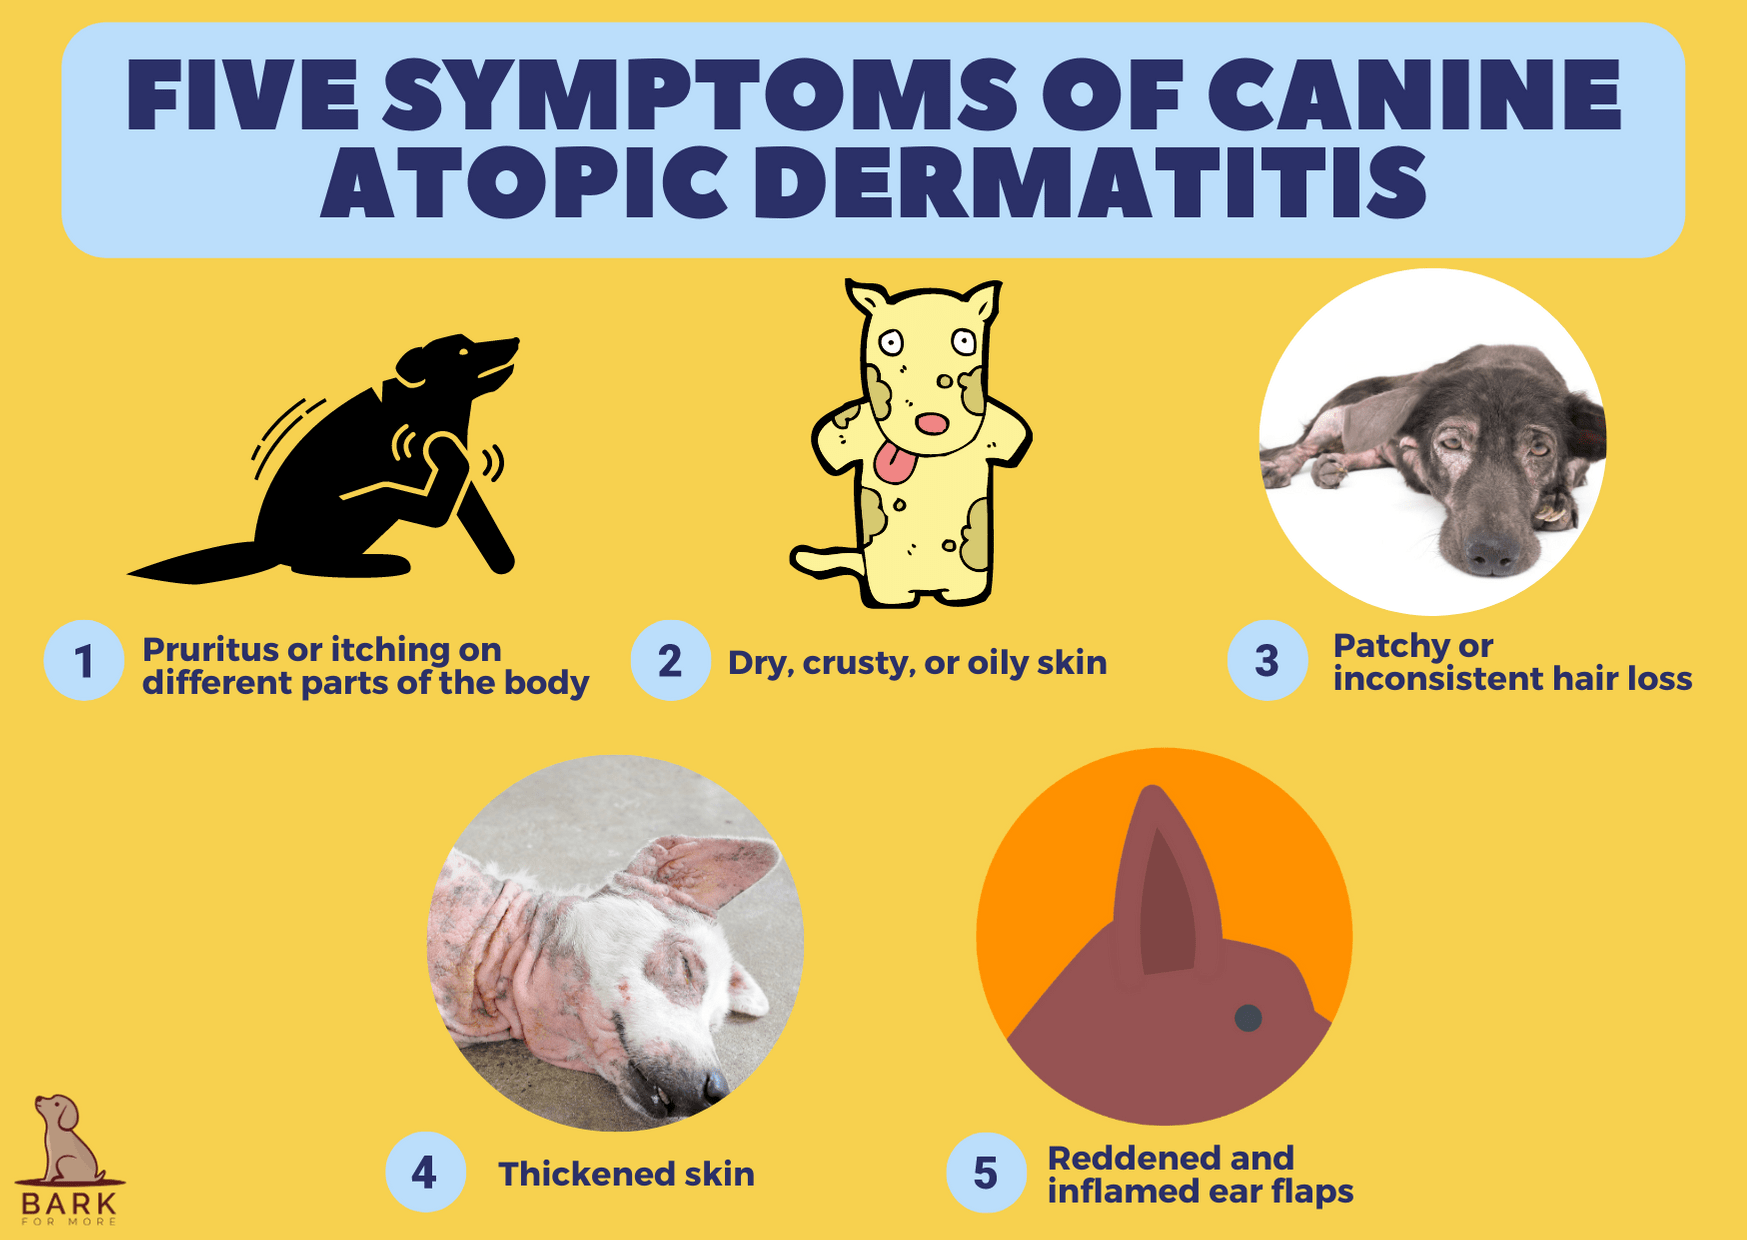 Symptoms of Canine Atopic Dermatitis